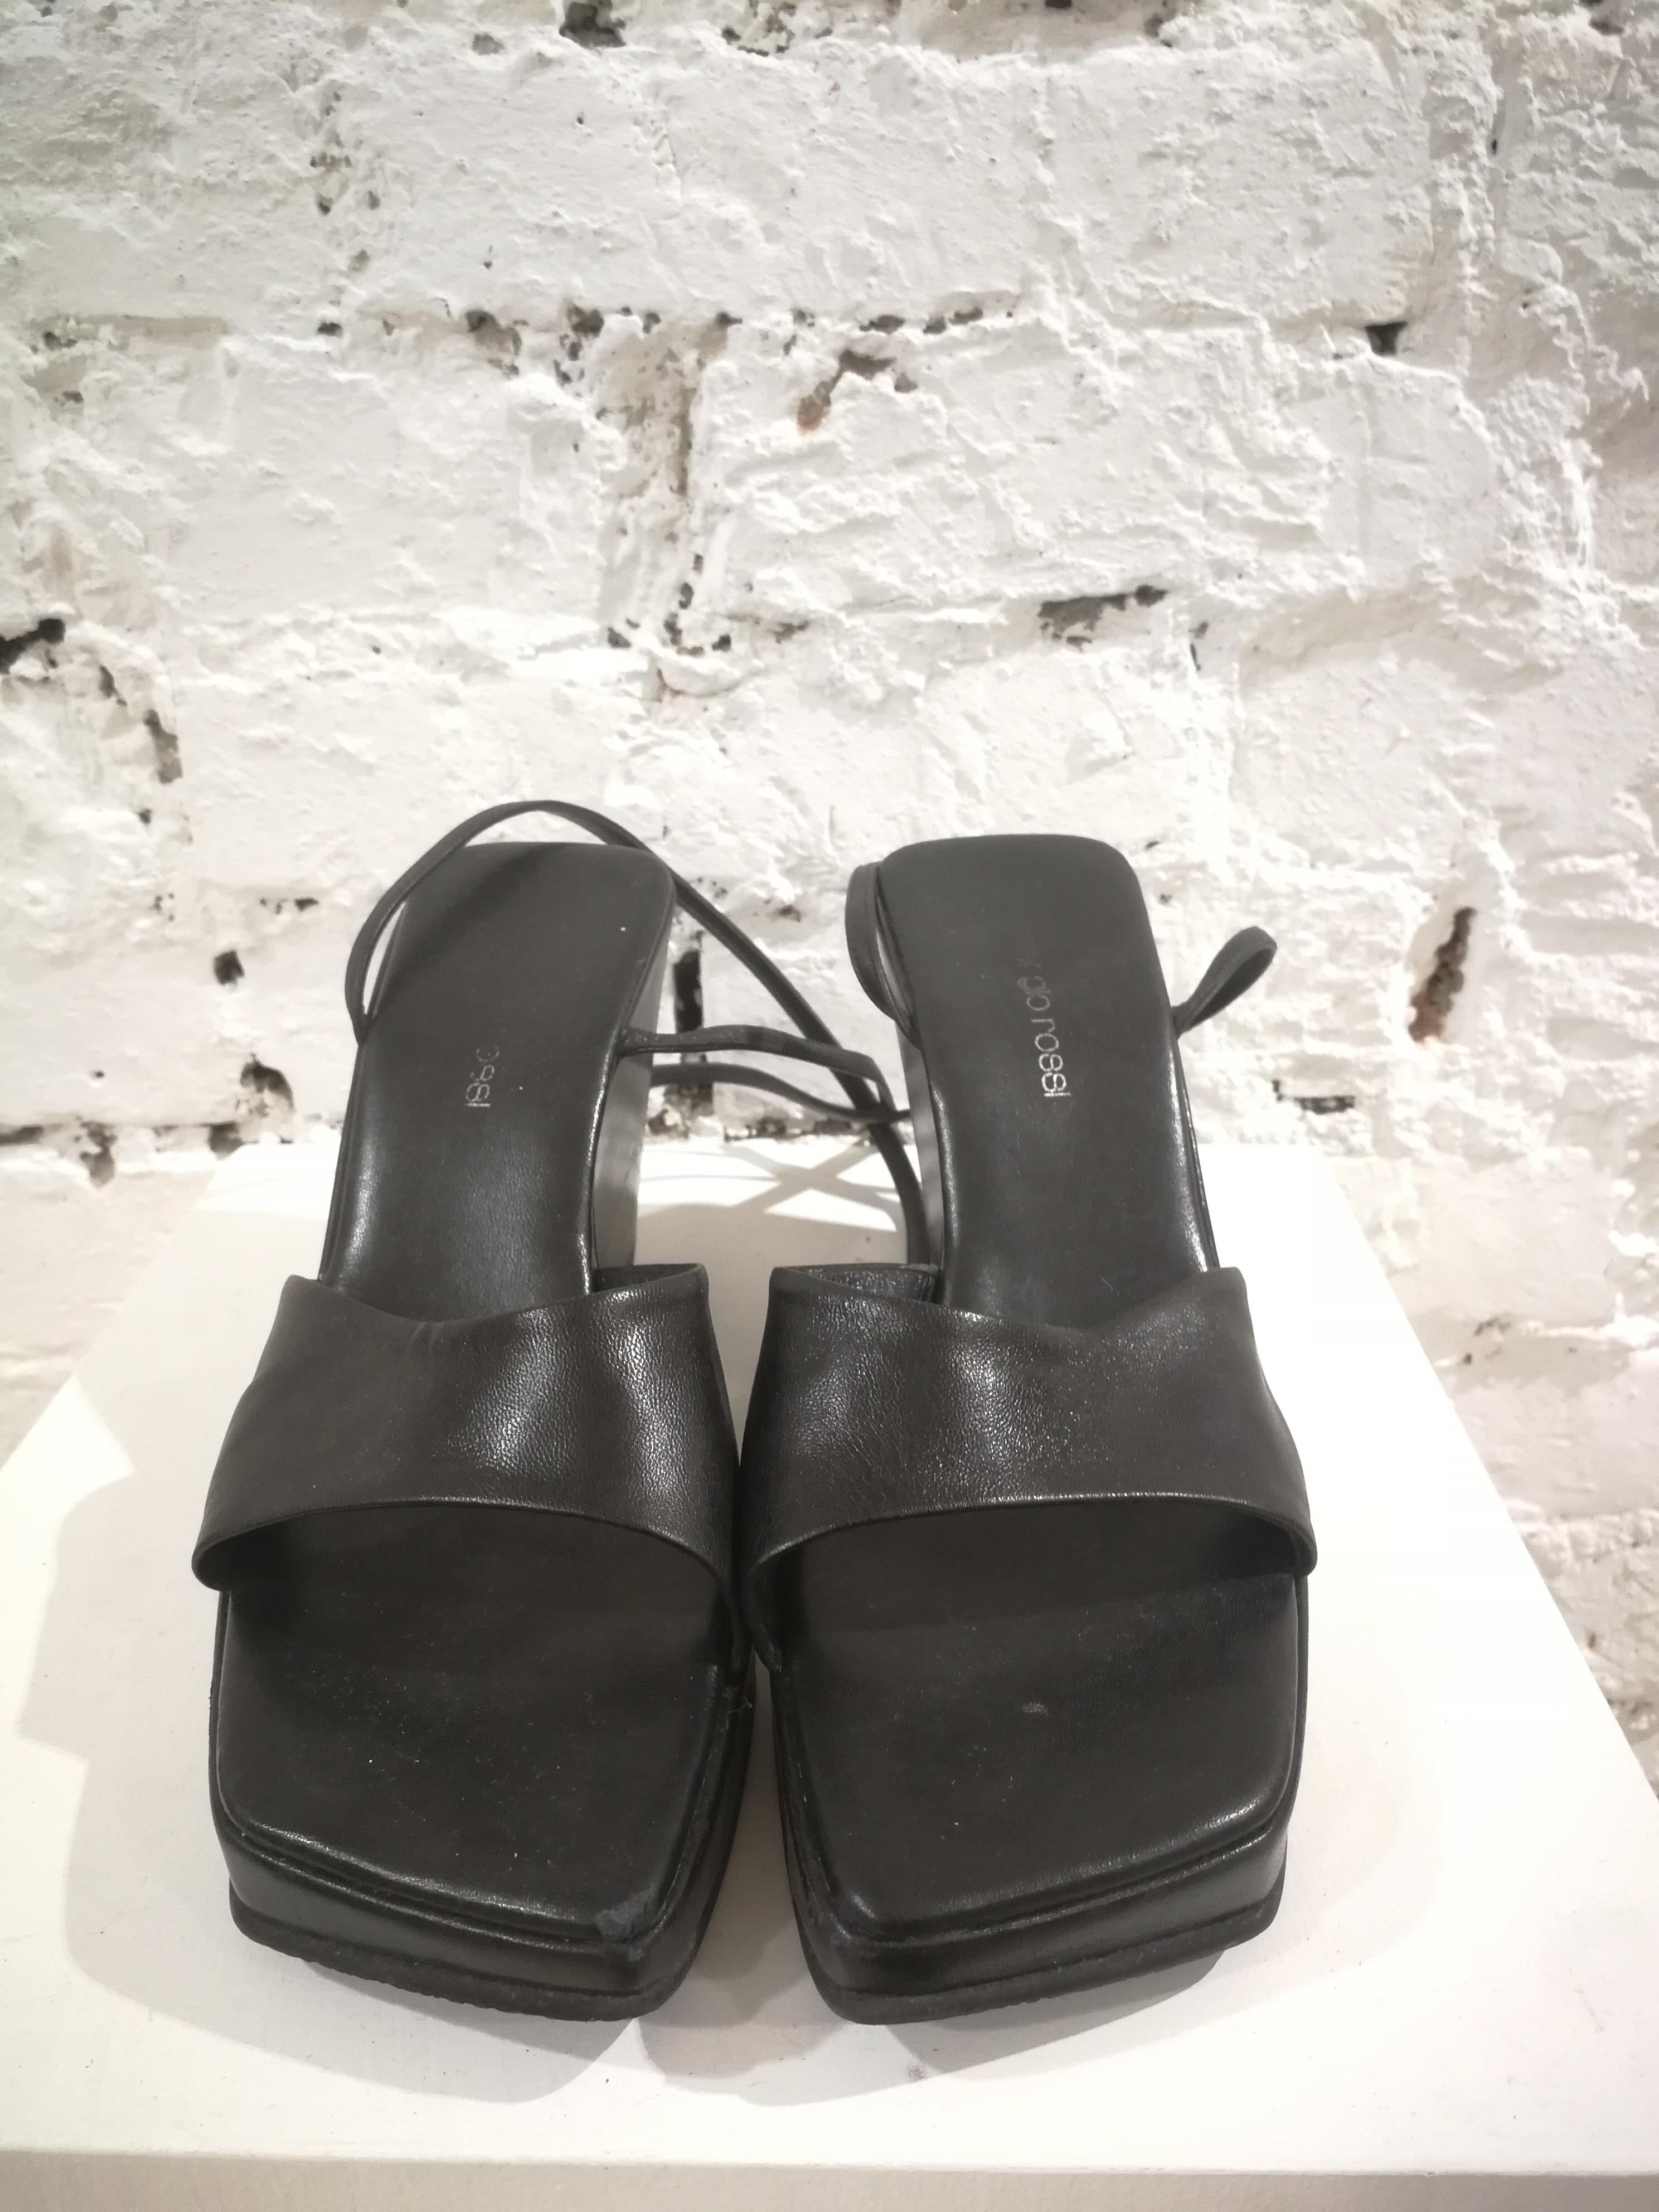 Women's Sergio Rossi Black Leather Wedge Heels